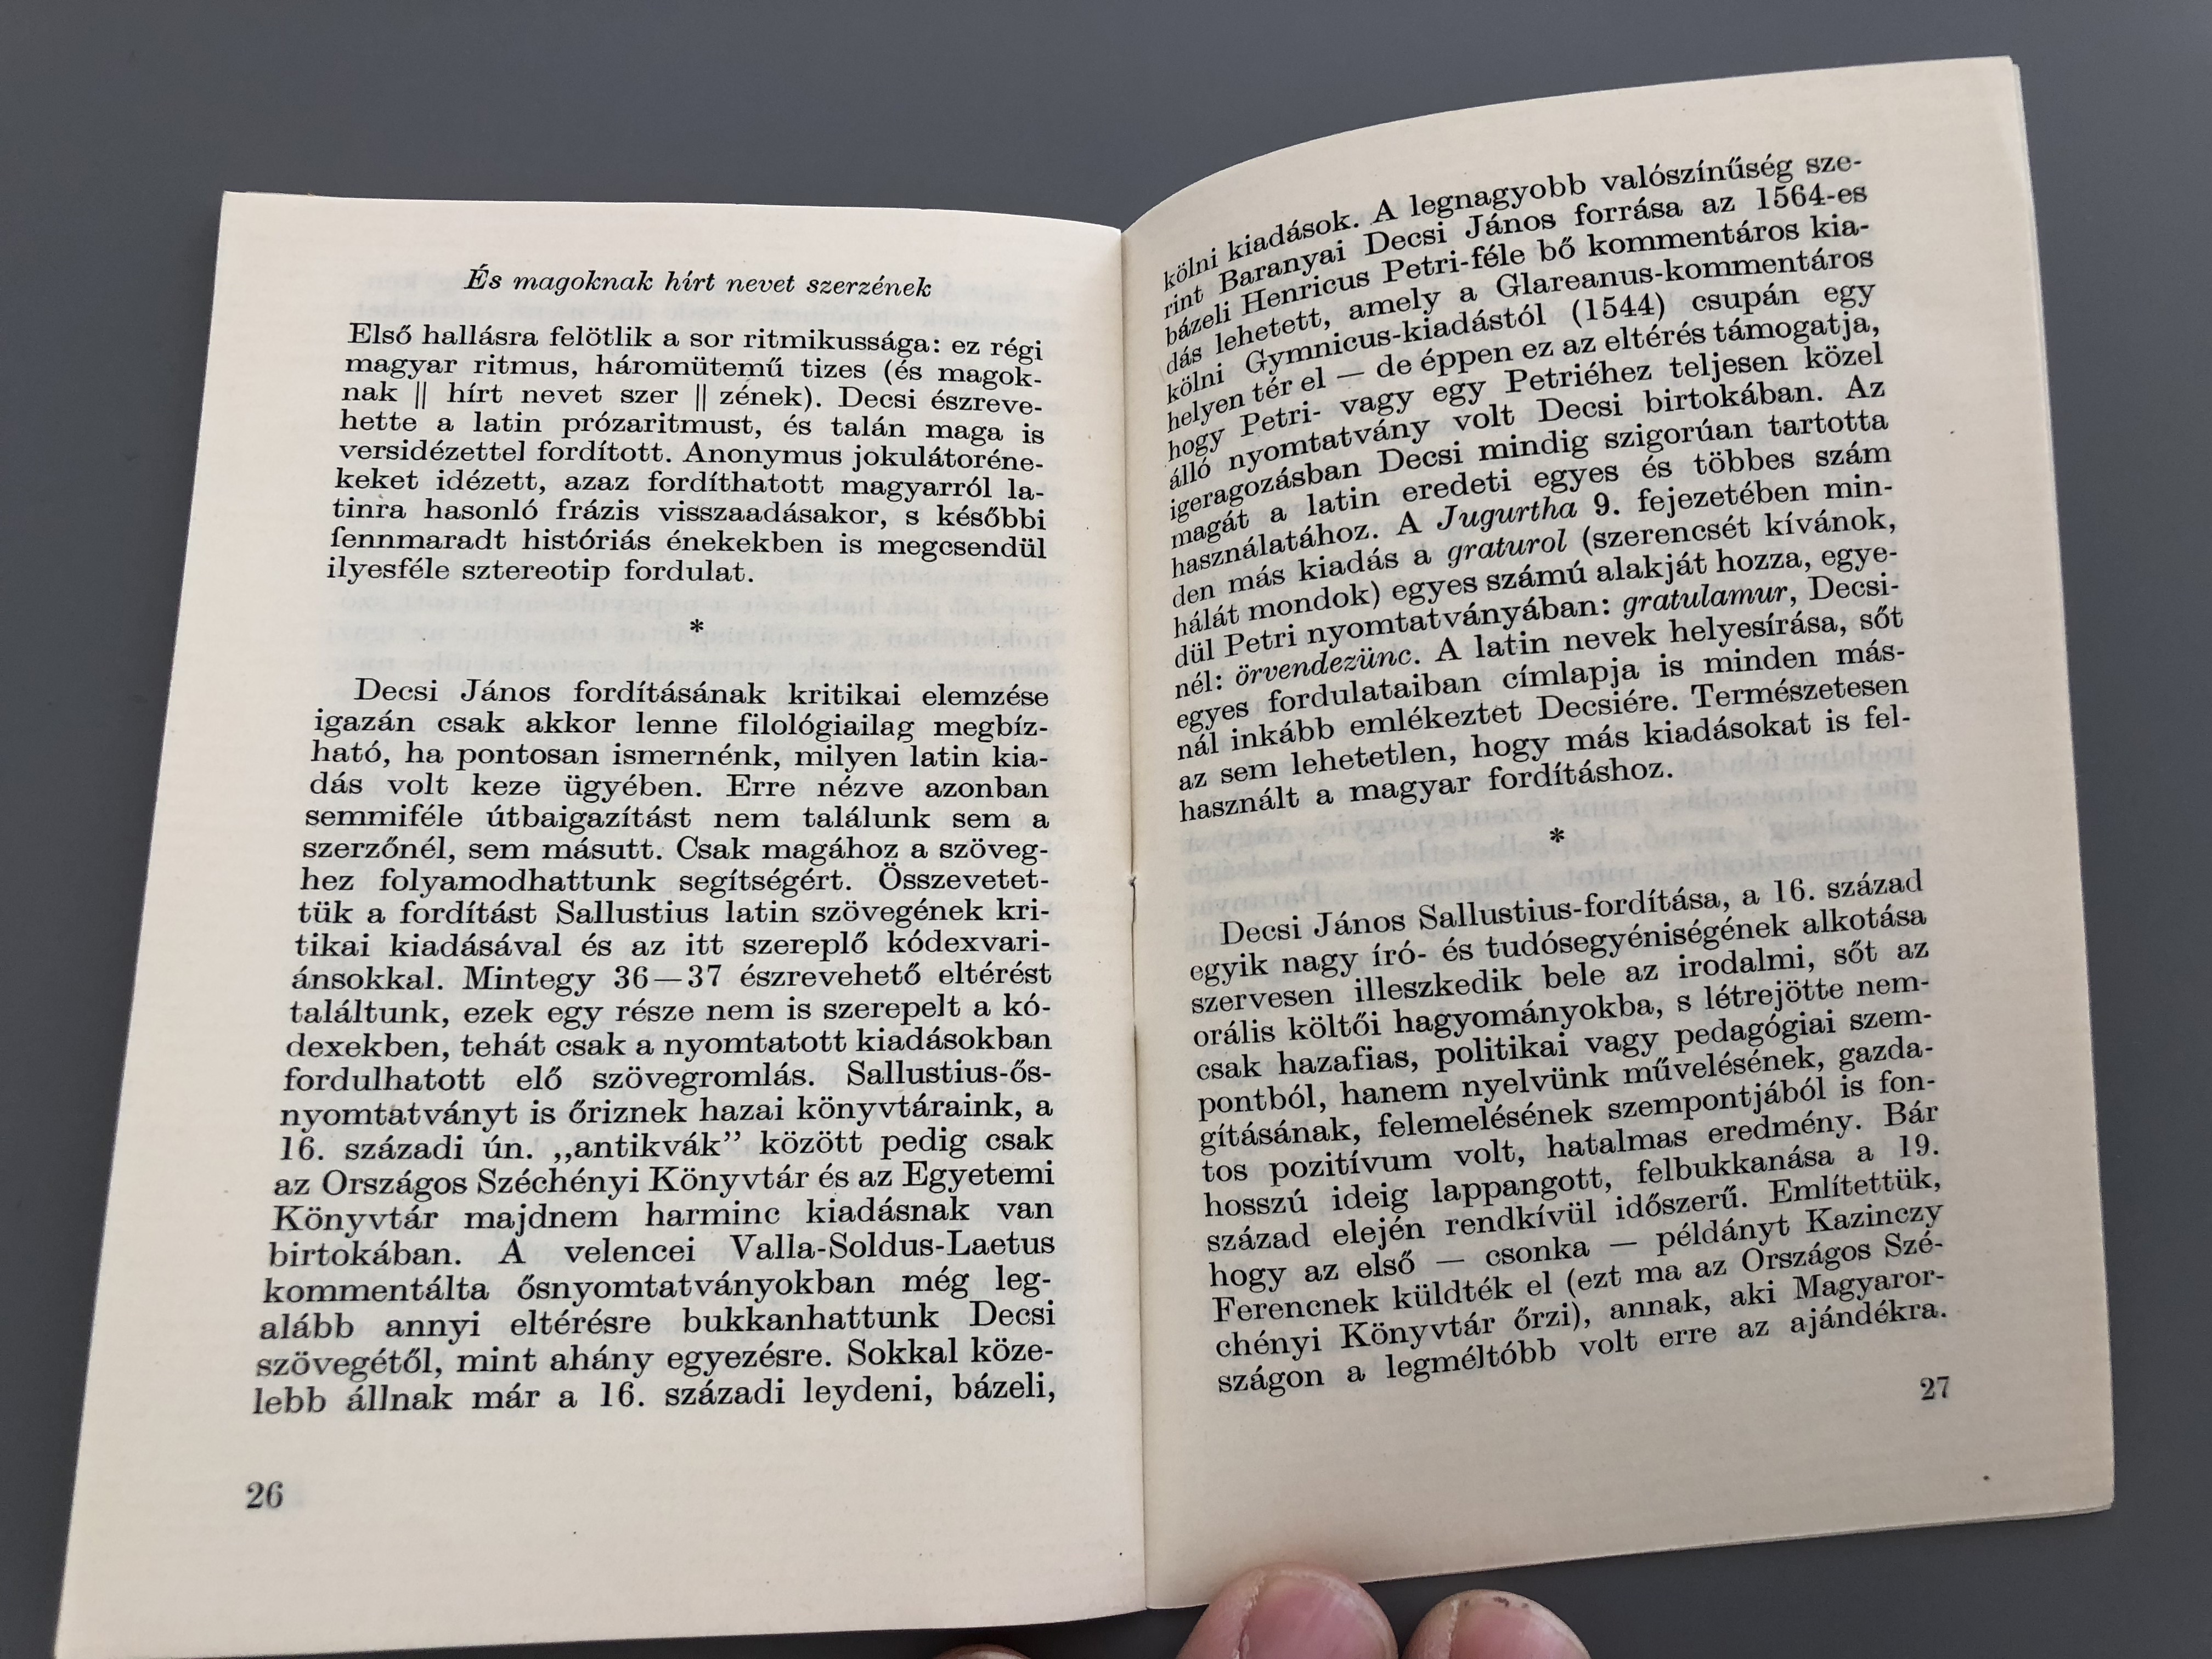 az-caius-crispus-sallustiusnak-k-t-hist-ri-ja-by-baranyai-d-csi-j-nos-szeben-1596-two-stories-from-caius-crispus-sallustius-in-hungarian-language-bibliotheca-hungarica-antiqua-x.-hardcover-akad-miai-kiad-1979-22-.jpg